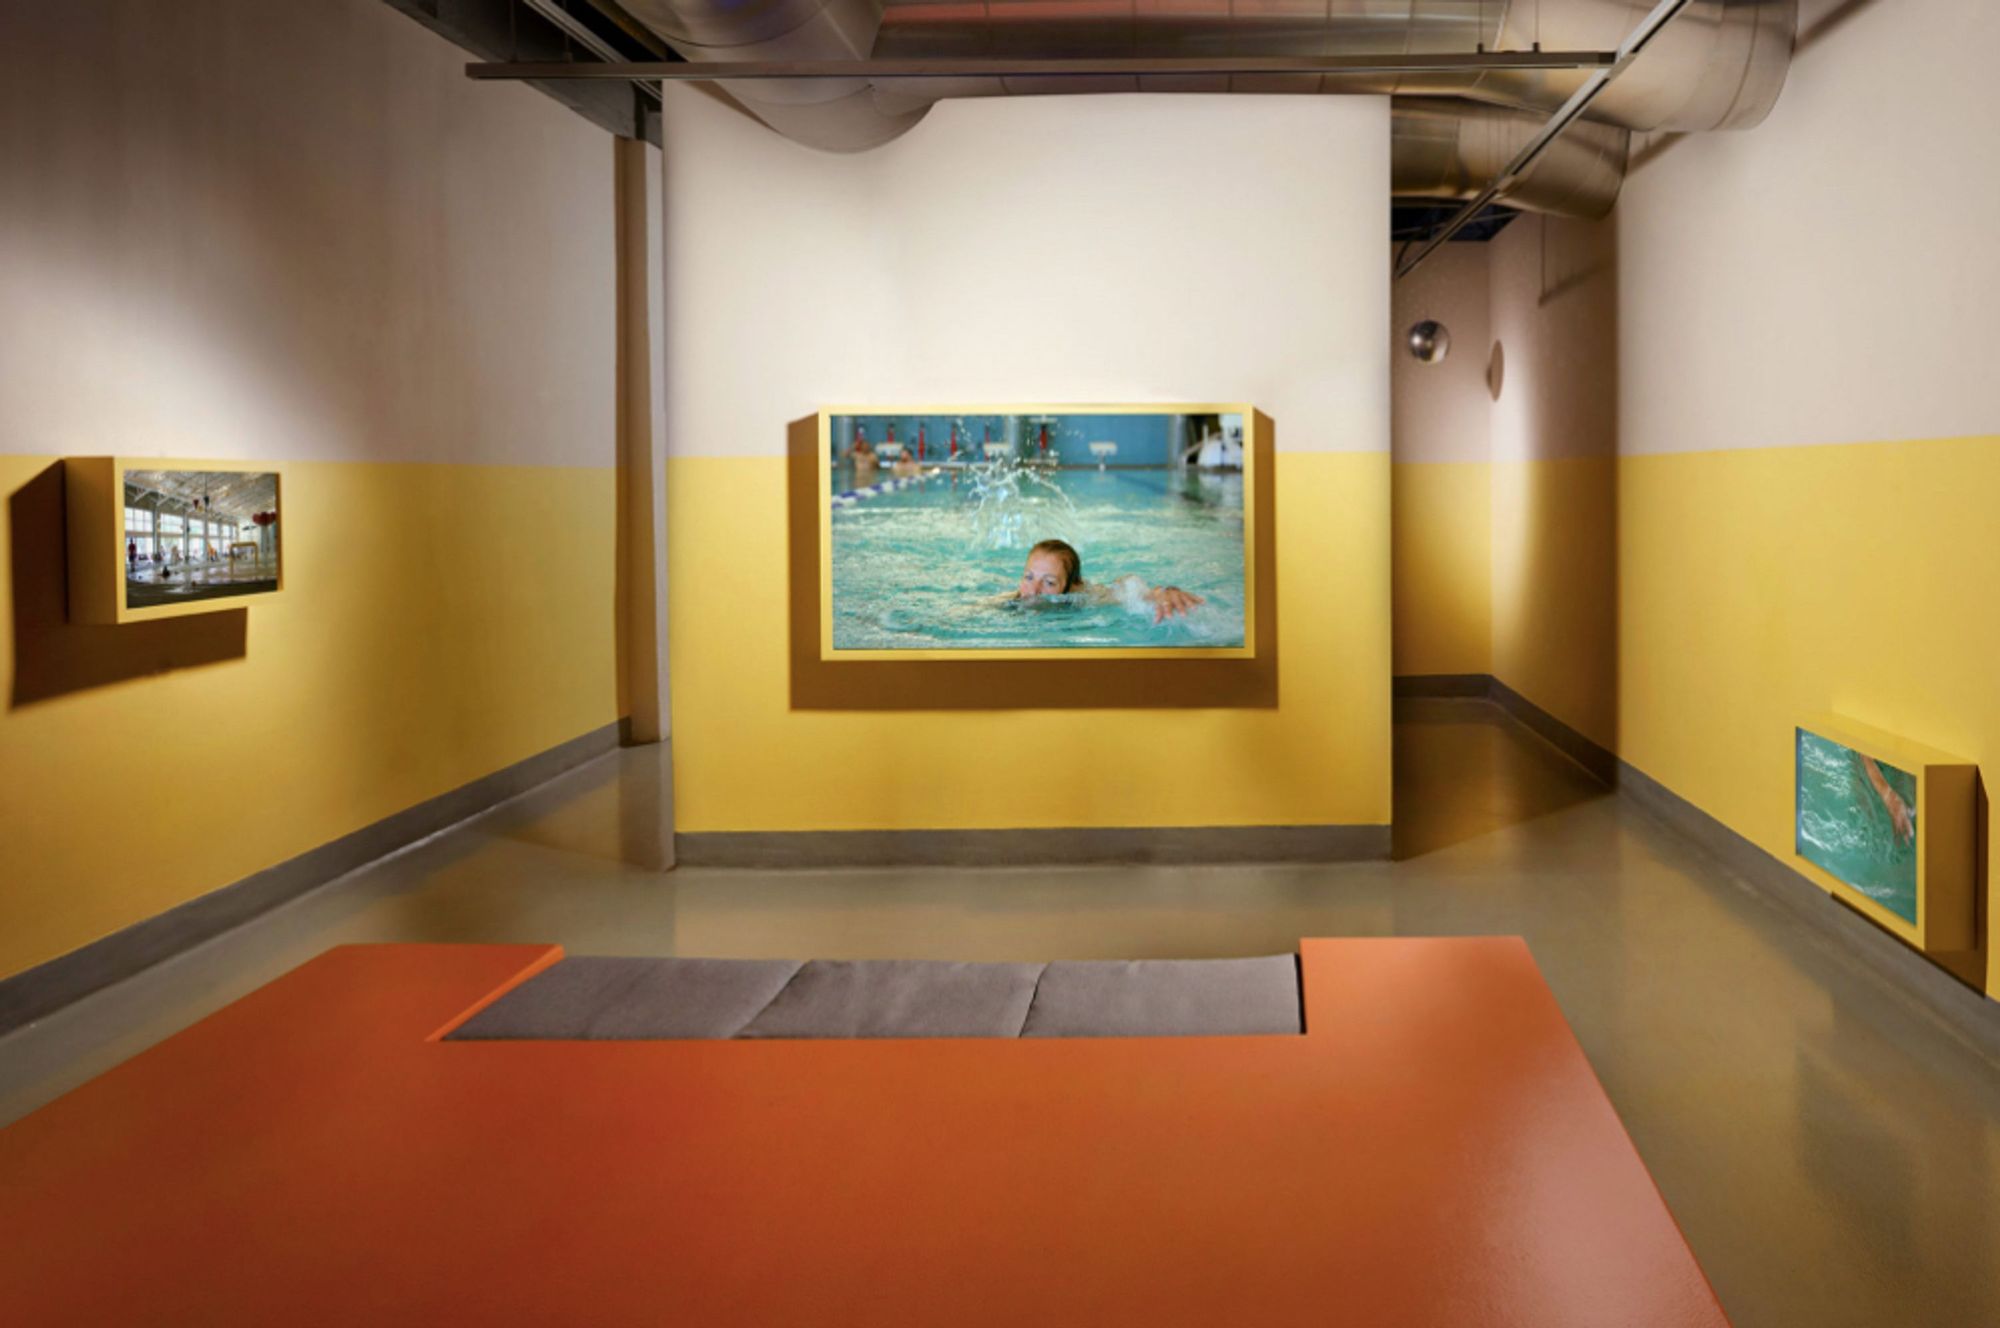 Installation view of Salidas y Entradas Exits and Entrances (2018), in collaboration with artist Jessica Hankey, Rubin Center for the Visual Arts, El Paso, TX.